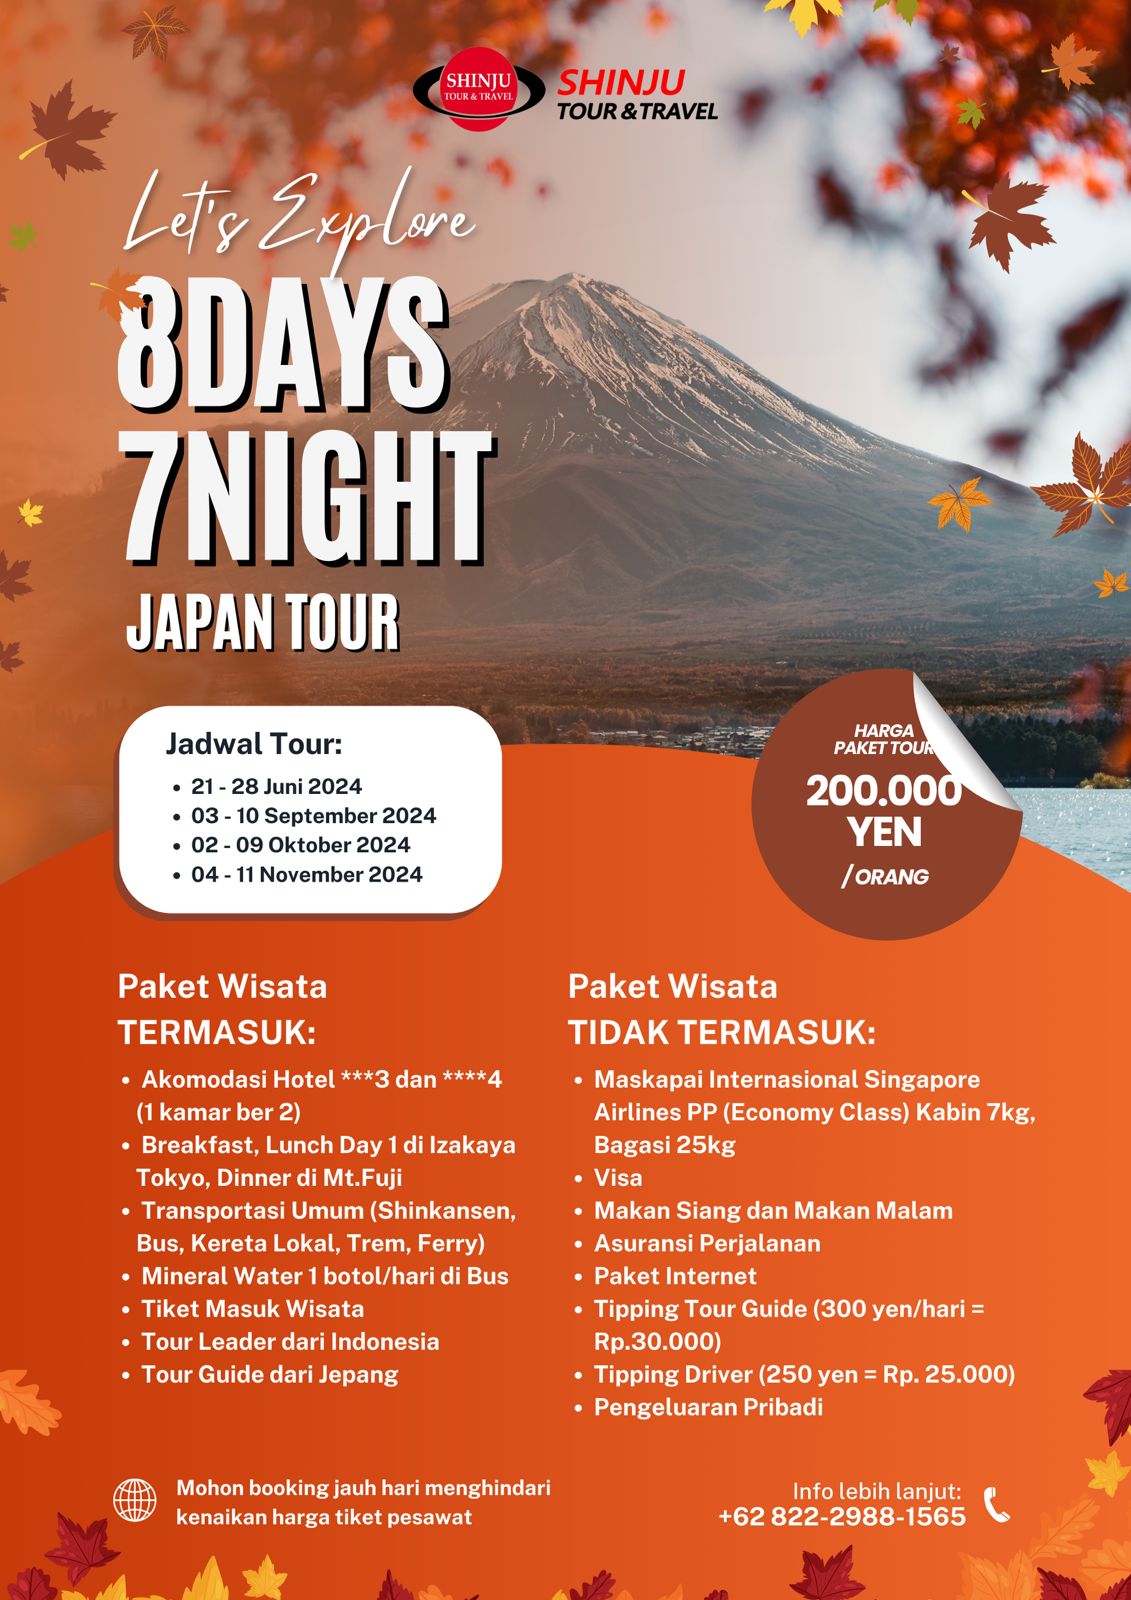 JAPAN TOUR 8 DAYS 7 NIGHT